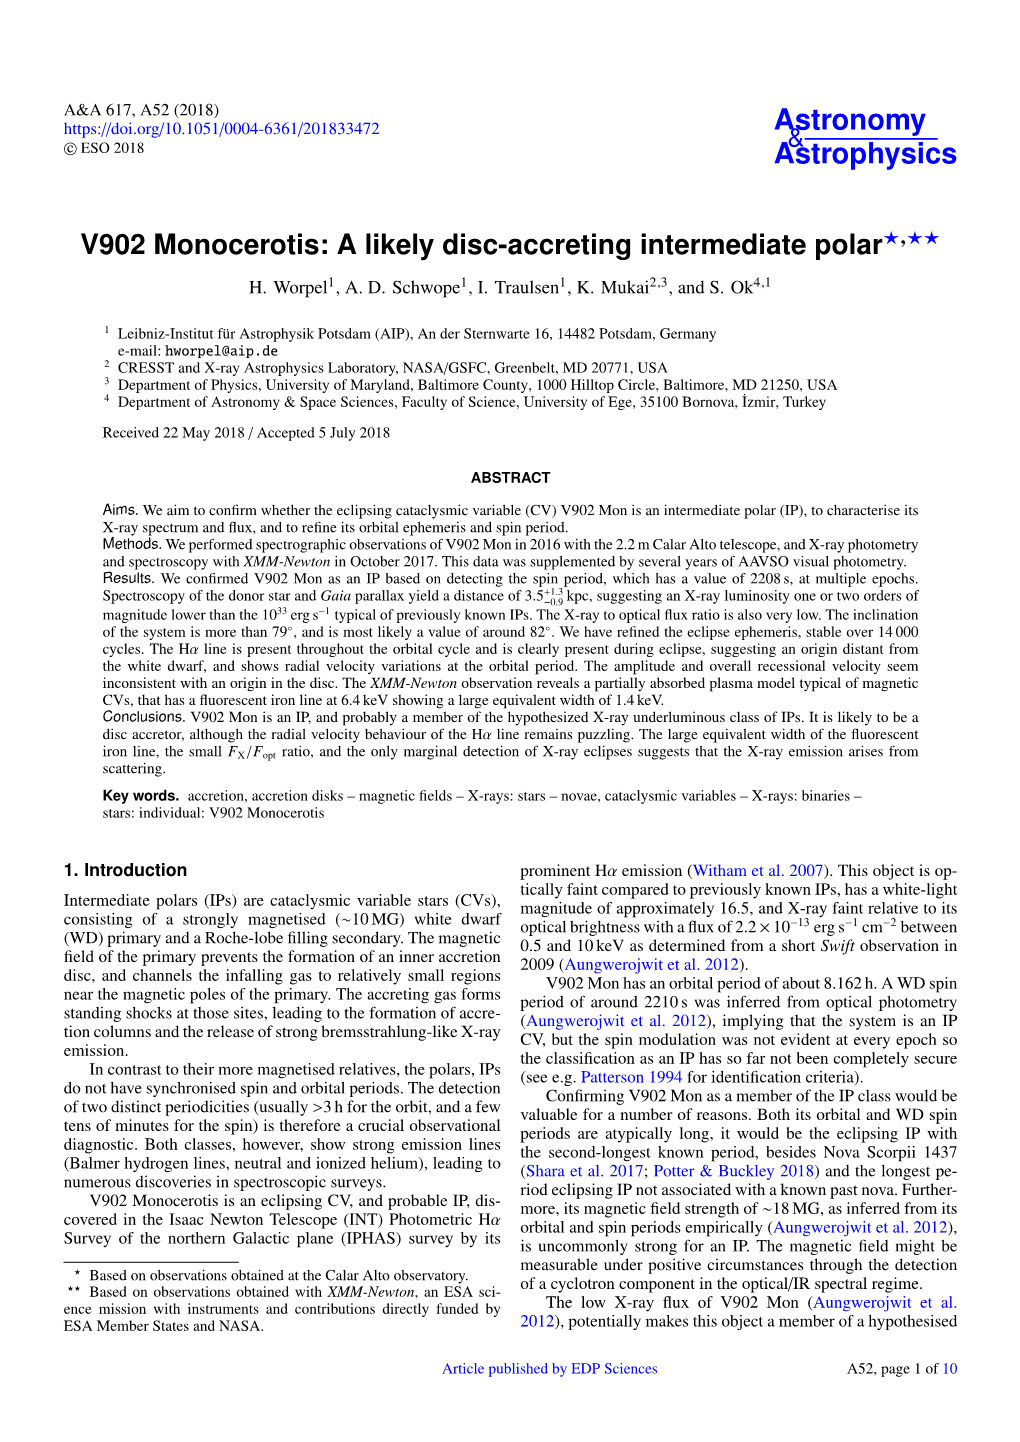 V902 Monocerotis: a Likely Disc-Accreting Intermediate Polar?,?? H